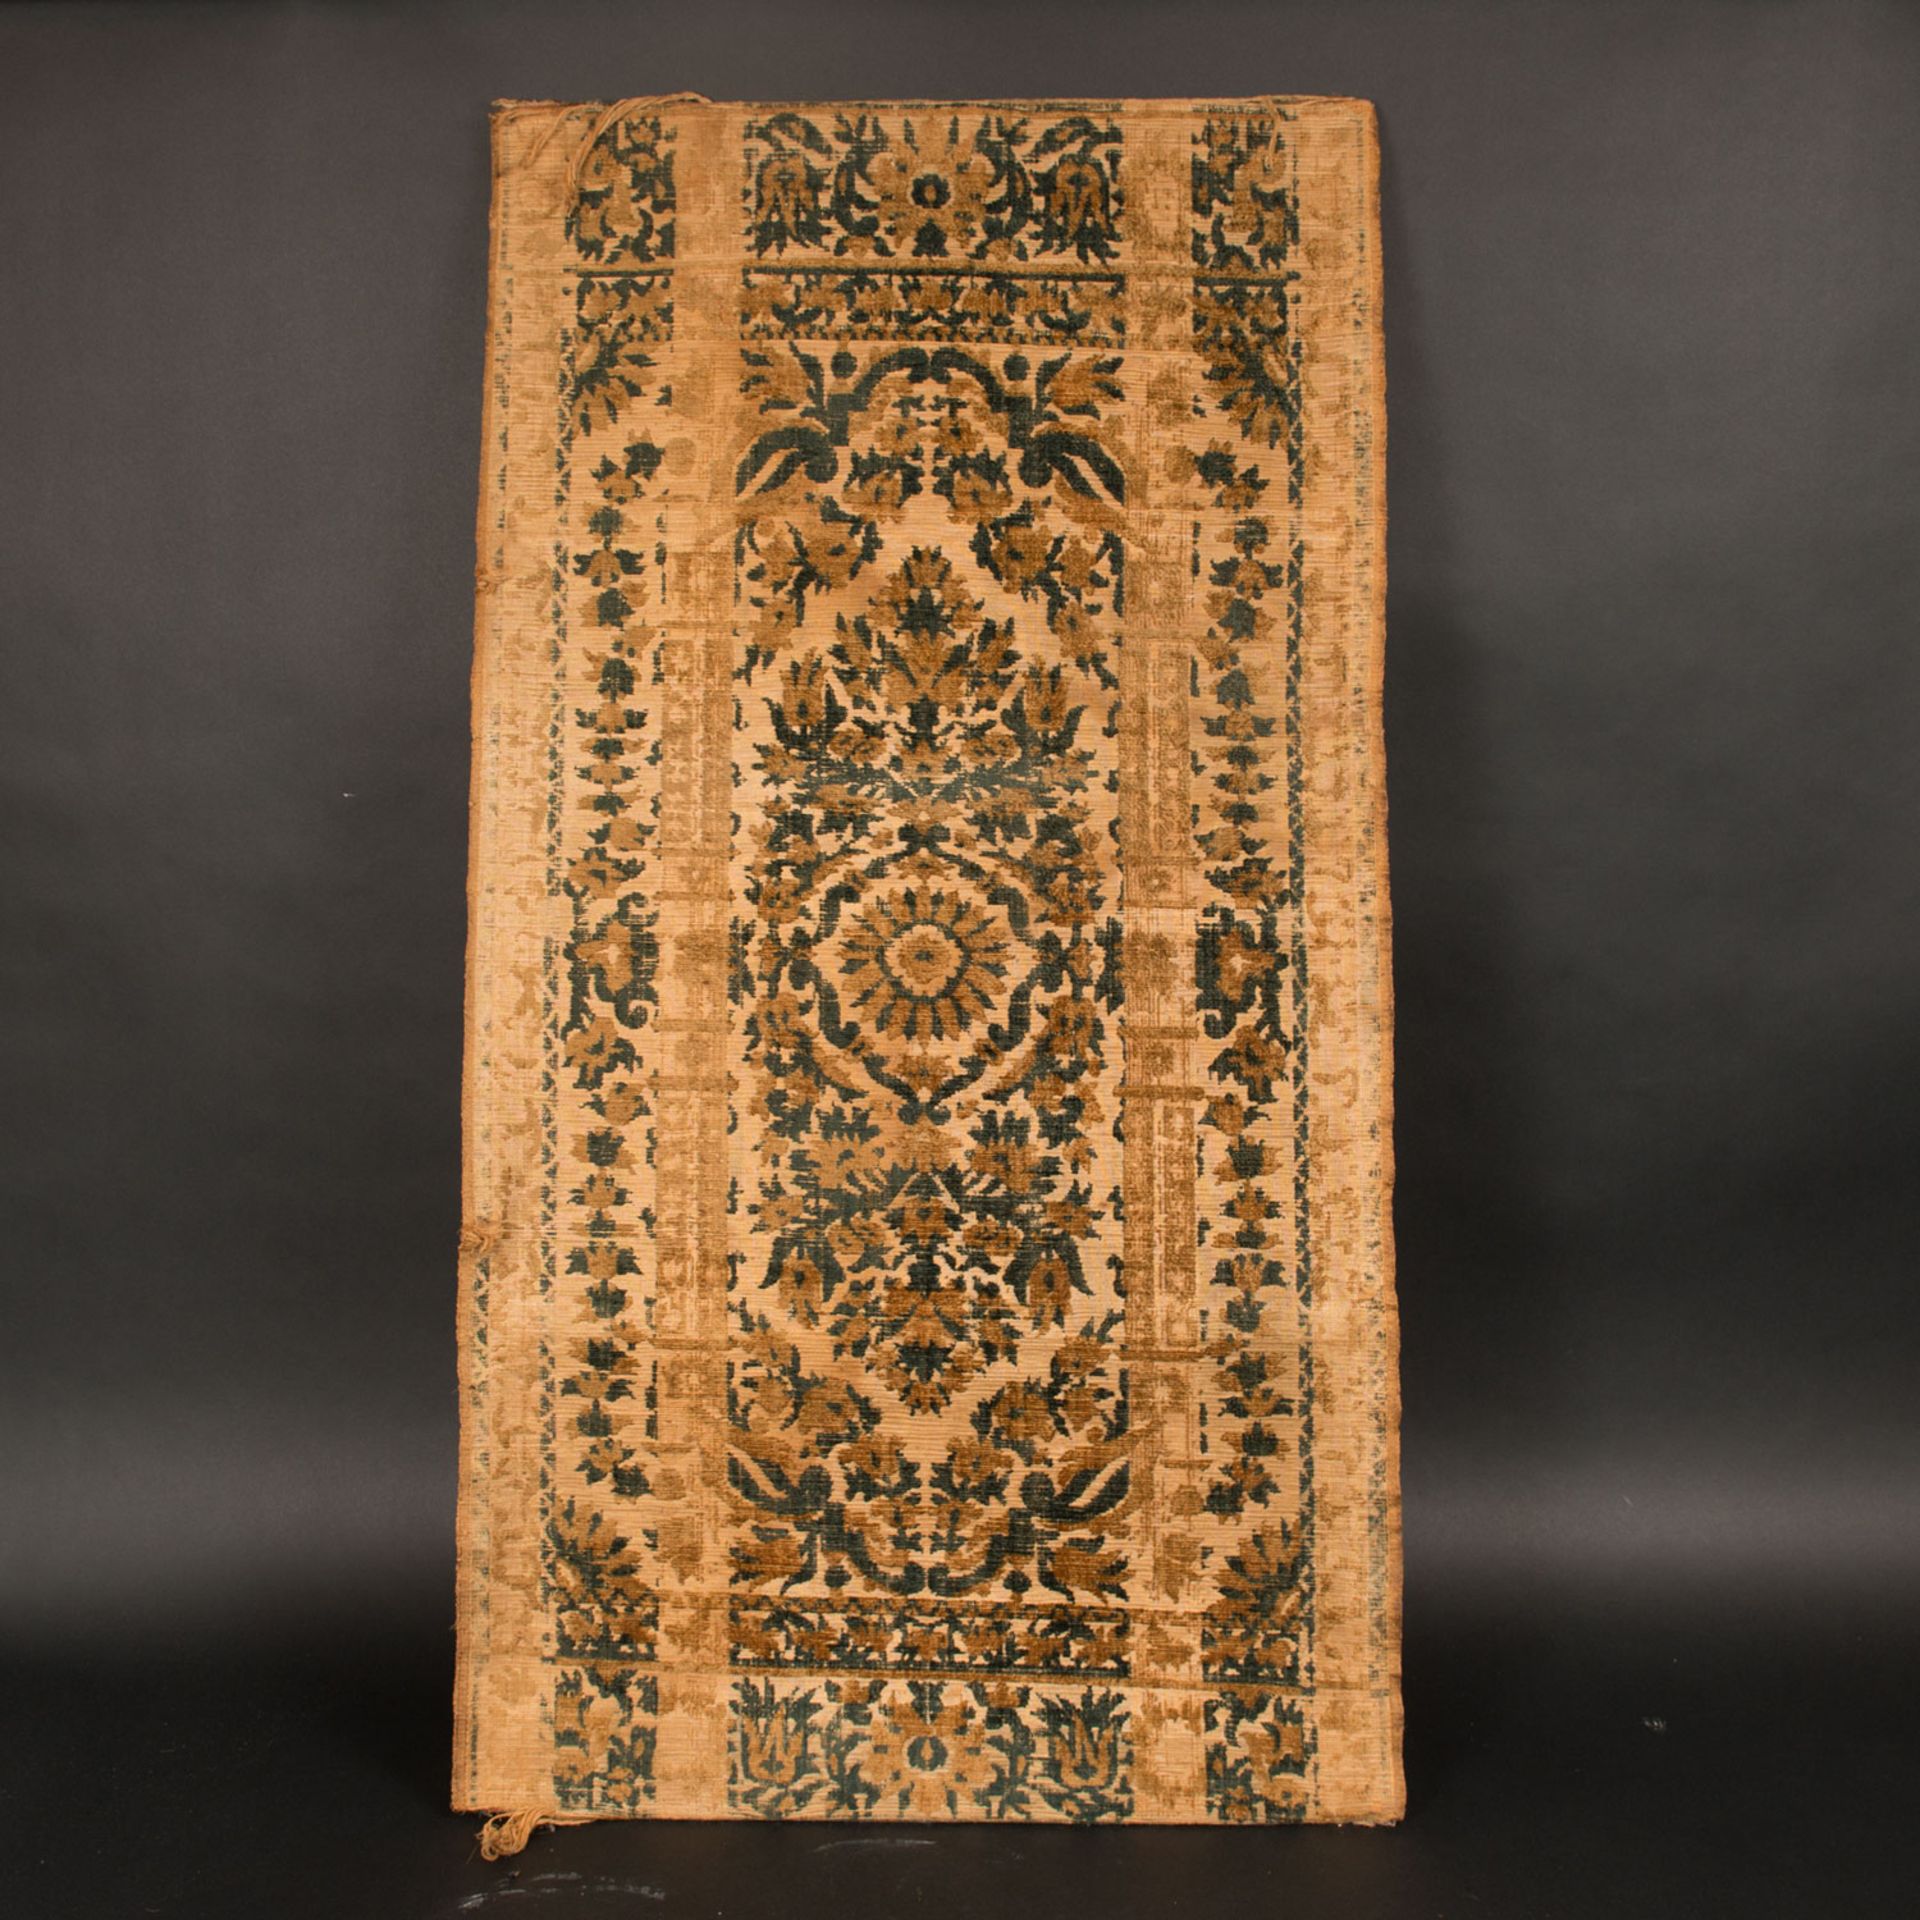 Islamic or Ottoman Embroidery